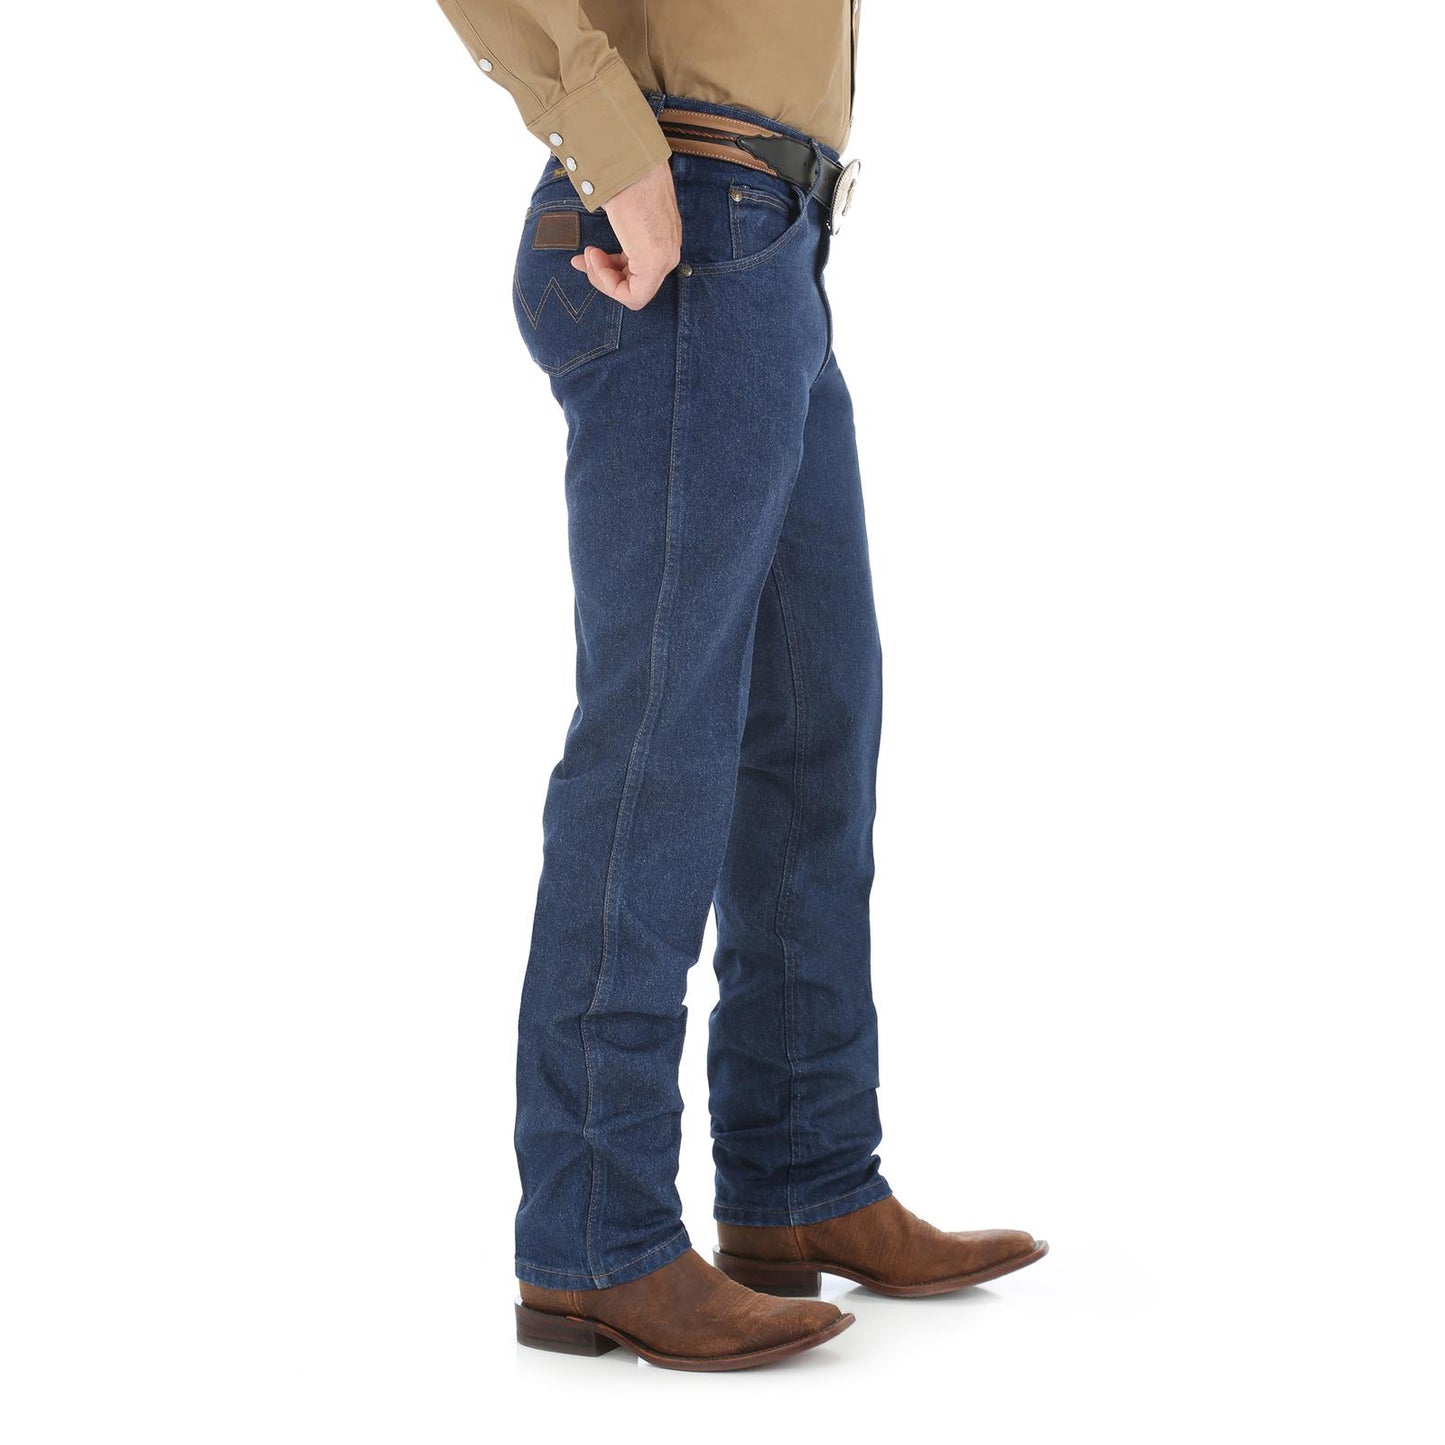 Wrangler® Premium Performance Cowboy Cut® Jeans - Regular Fit - Prewash